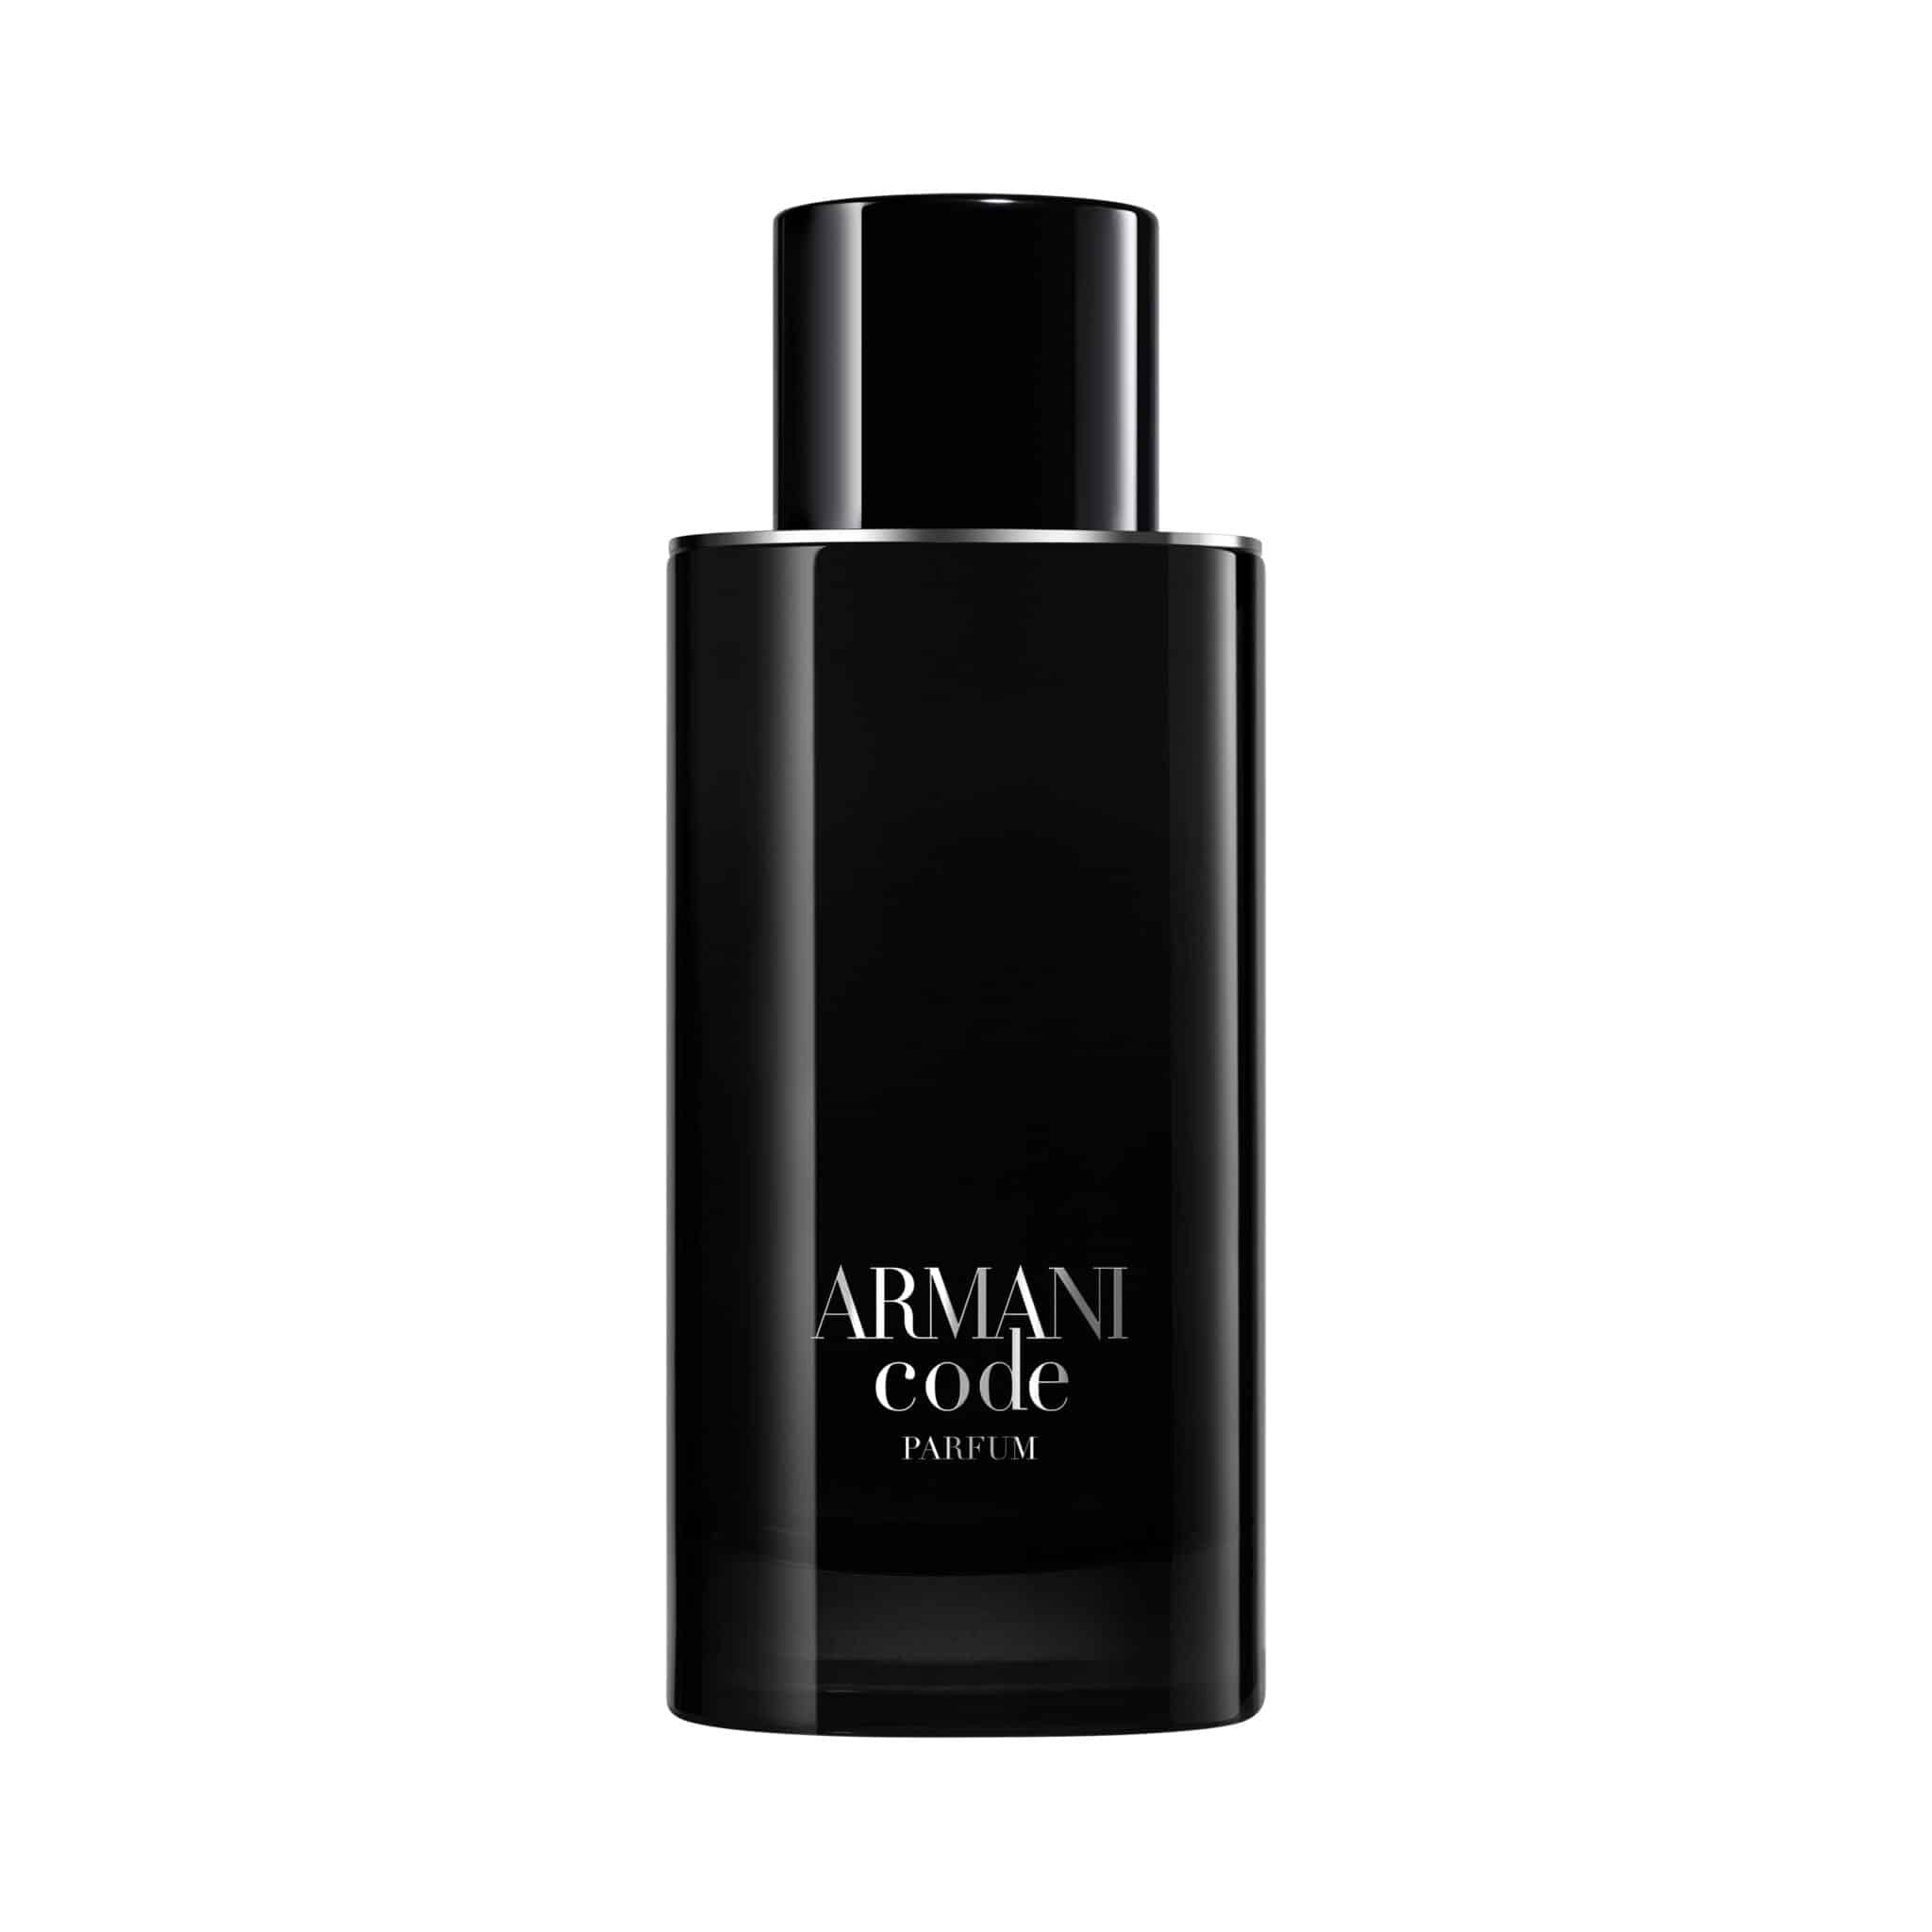 Het Boeiende Verhaal van Armani Code Parfum van Giorgio Armani